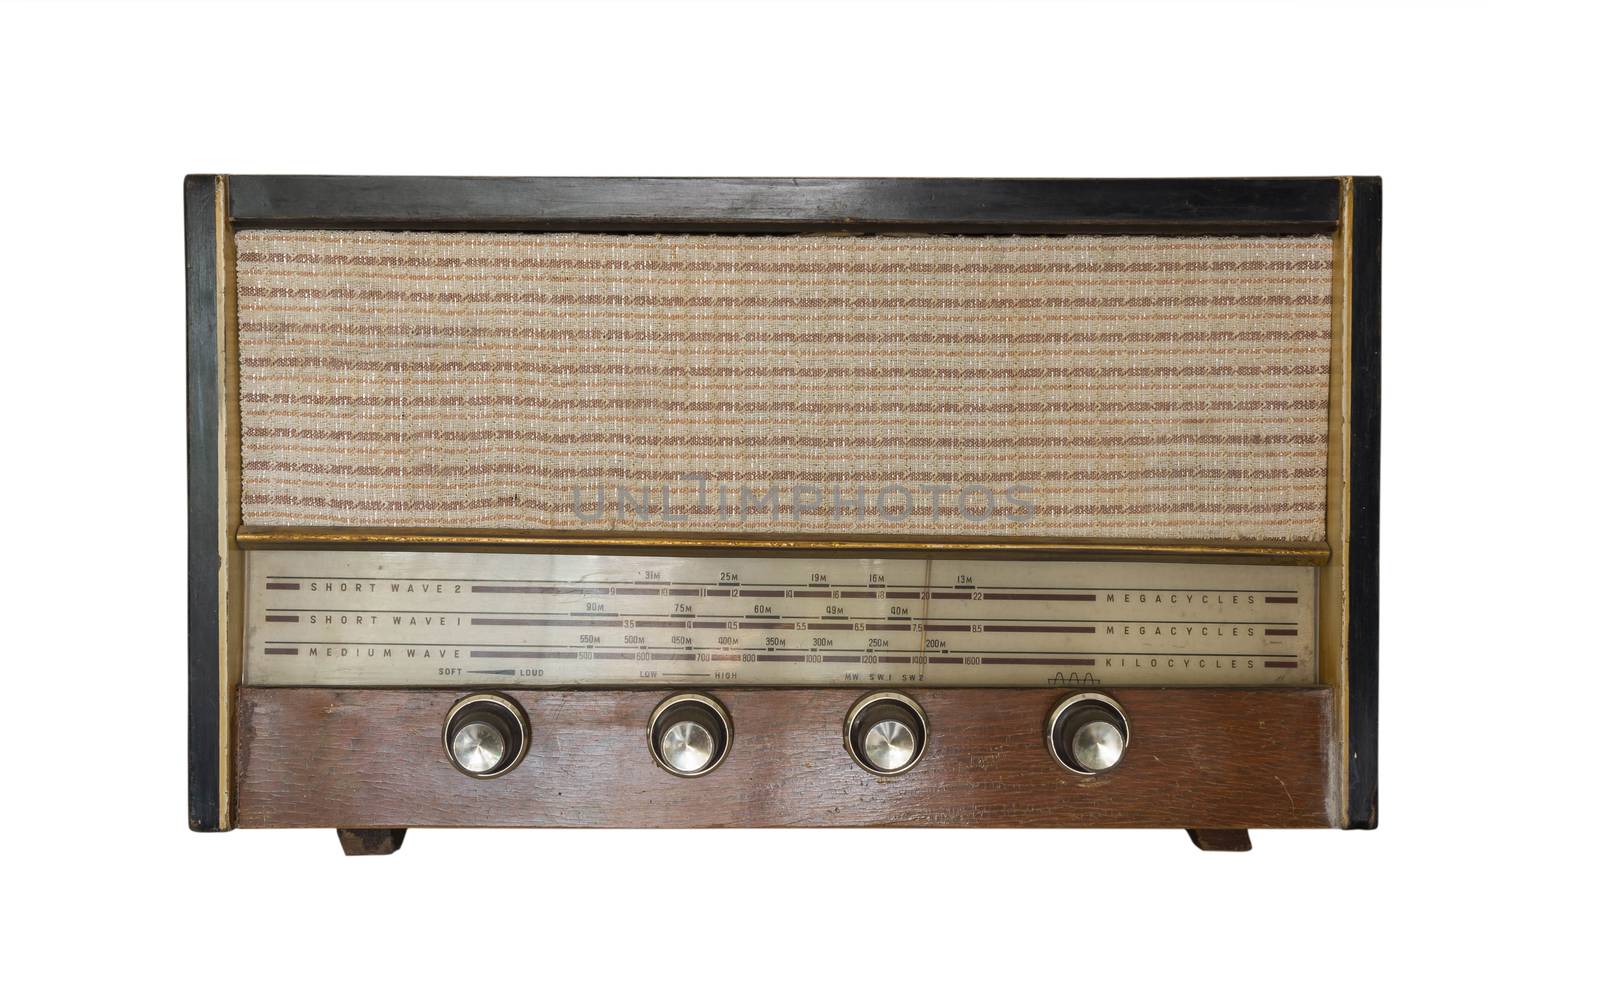 Vintage fashioned radio by seksan44